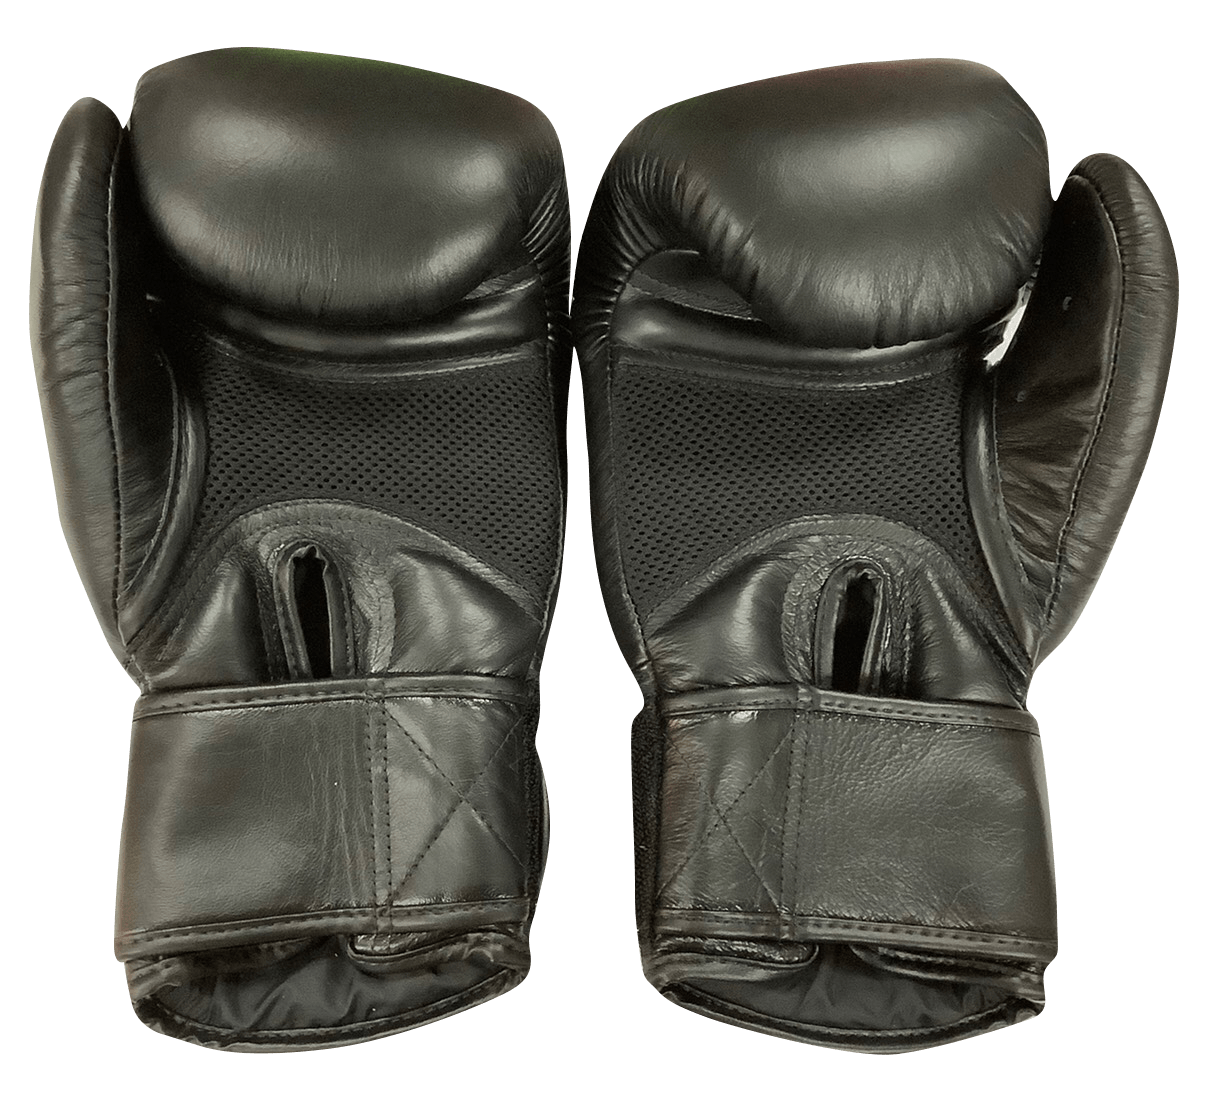 Top King Boxing Gloves Air Velcor TKBGAV Black - SUPER EXPORT SHOP